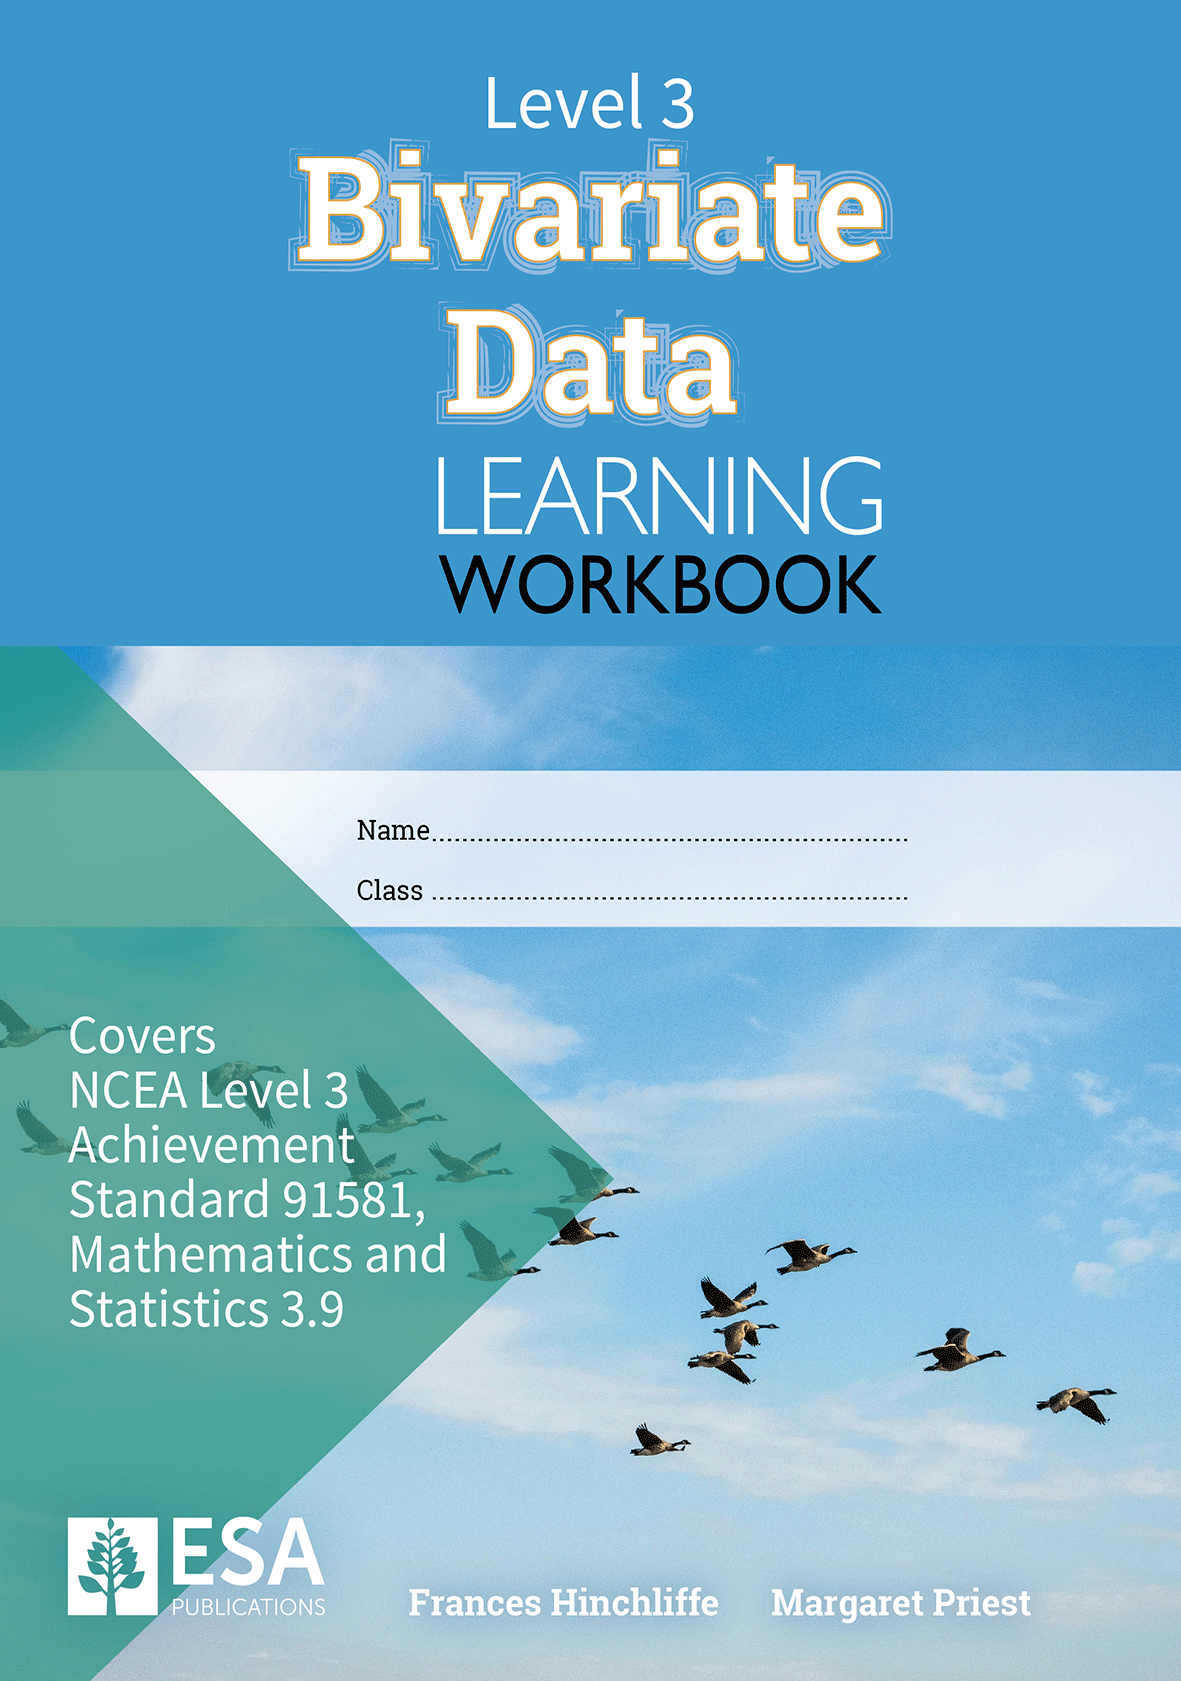 Level 3 Bivariate Data 3.9 Learning Workbook